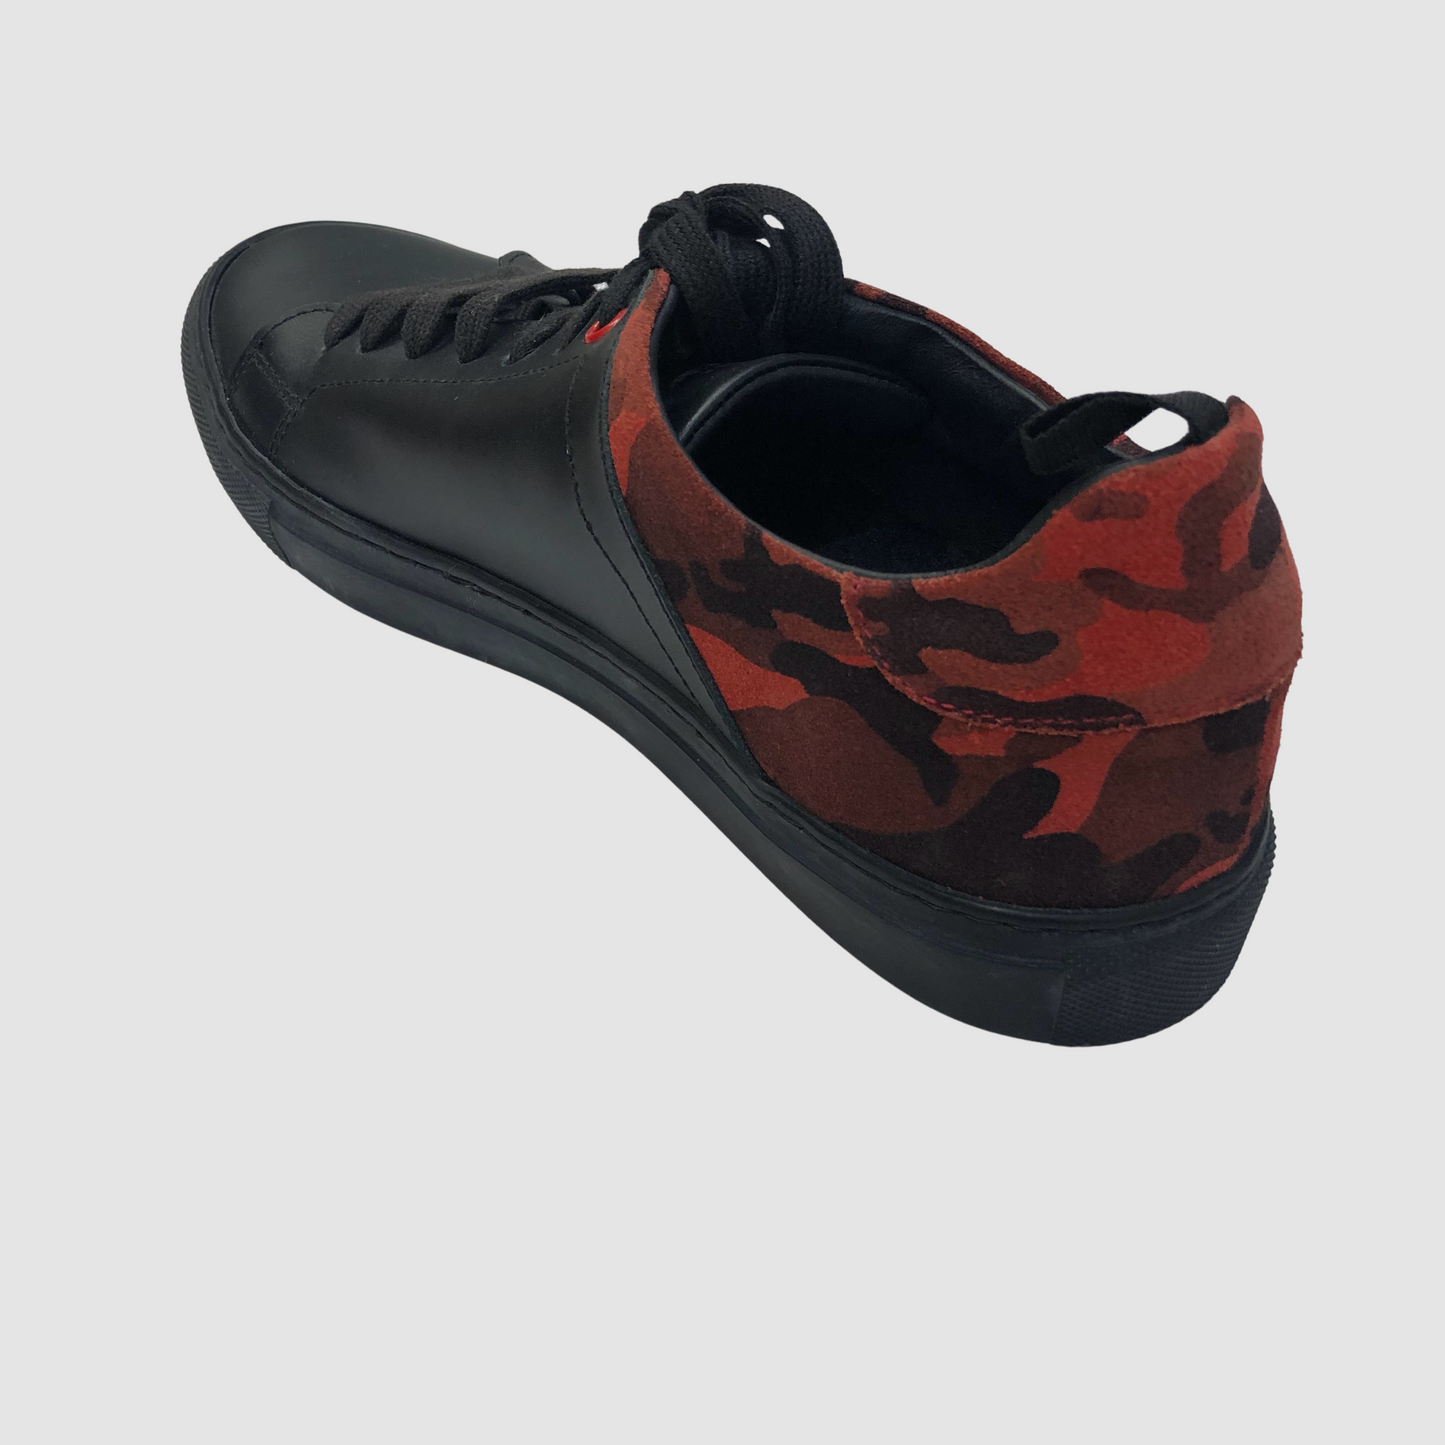 Black W Red Sneakers